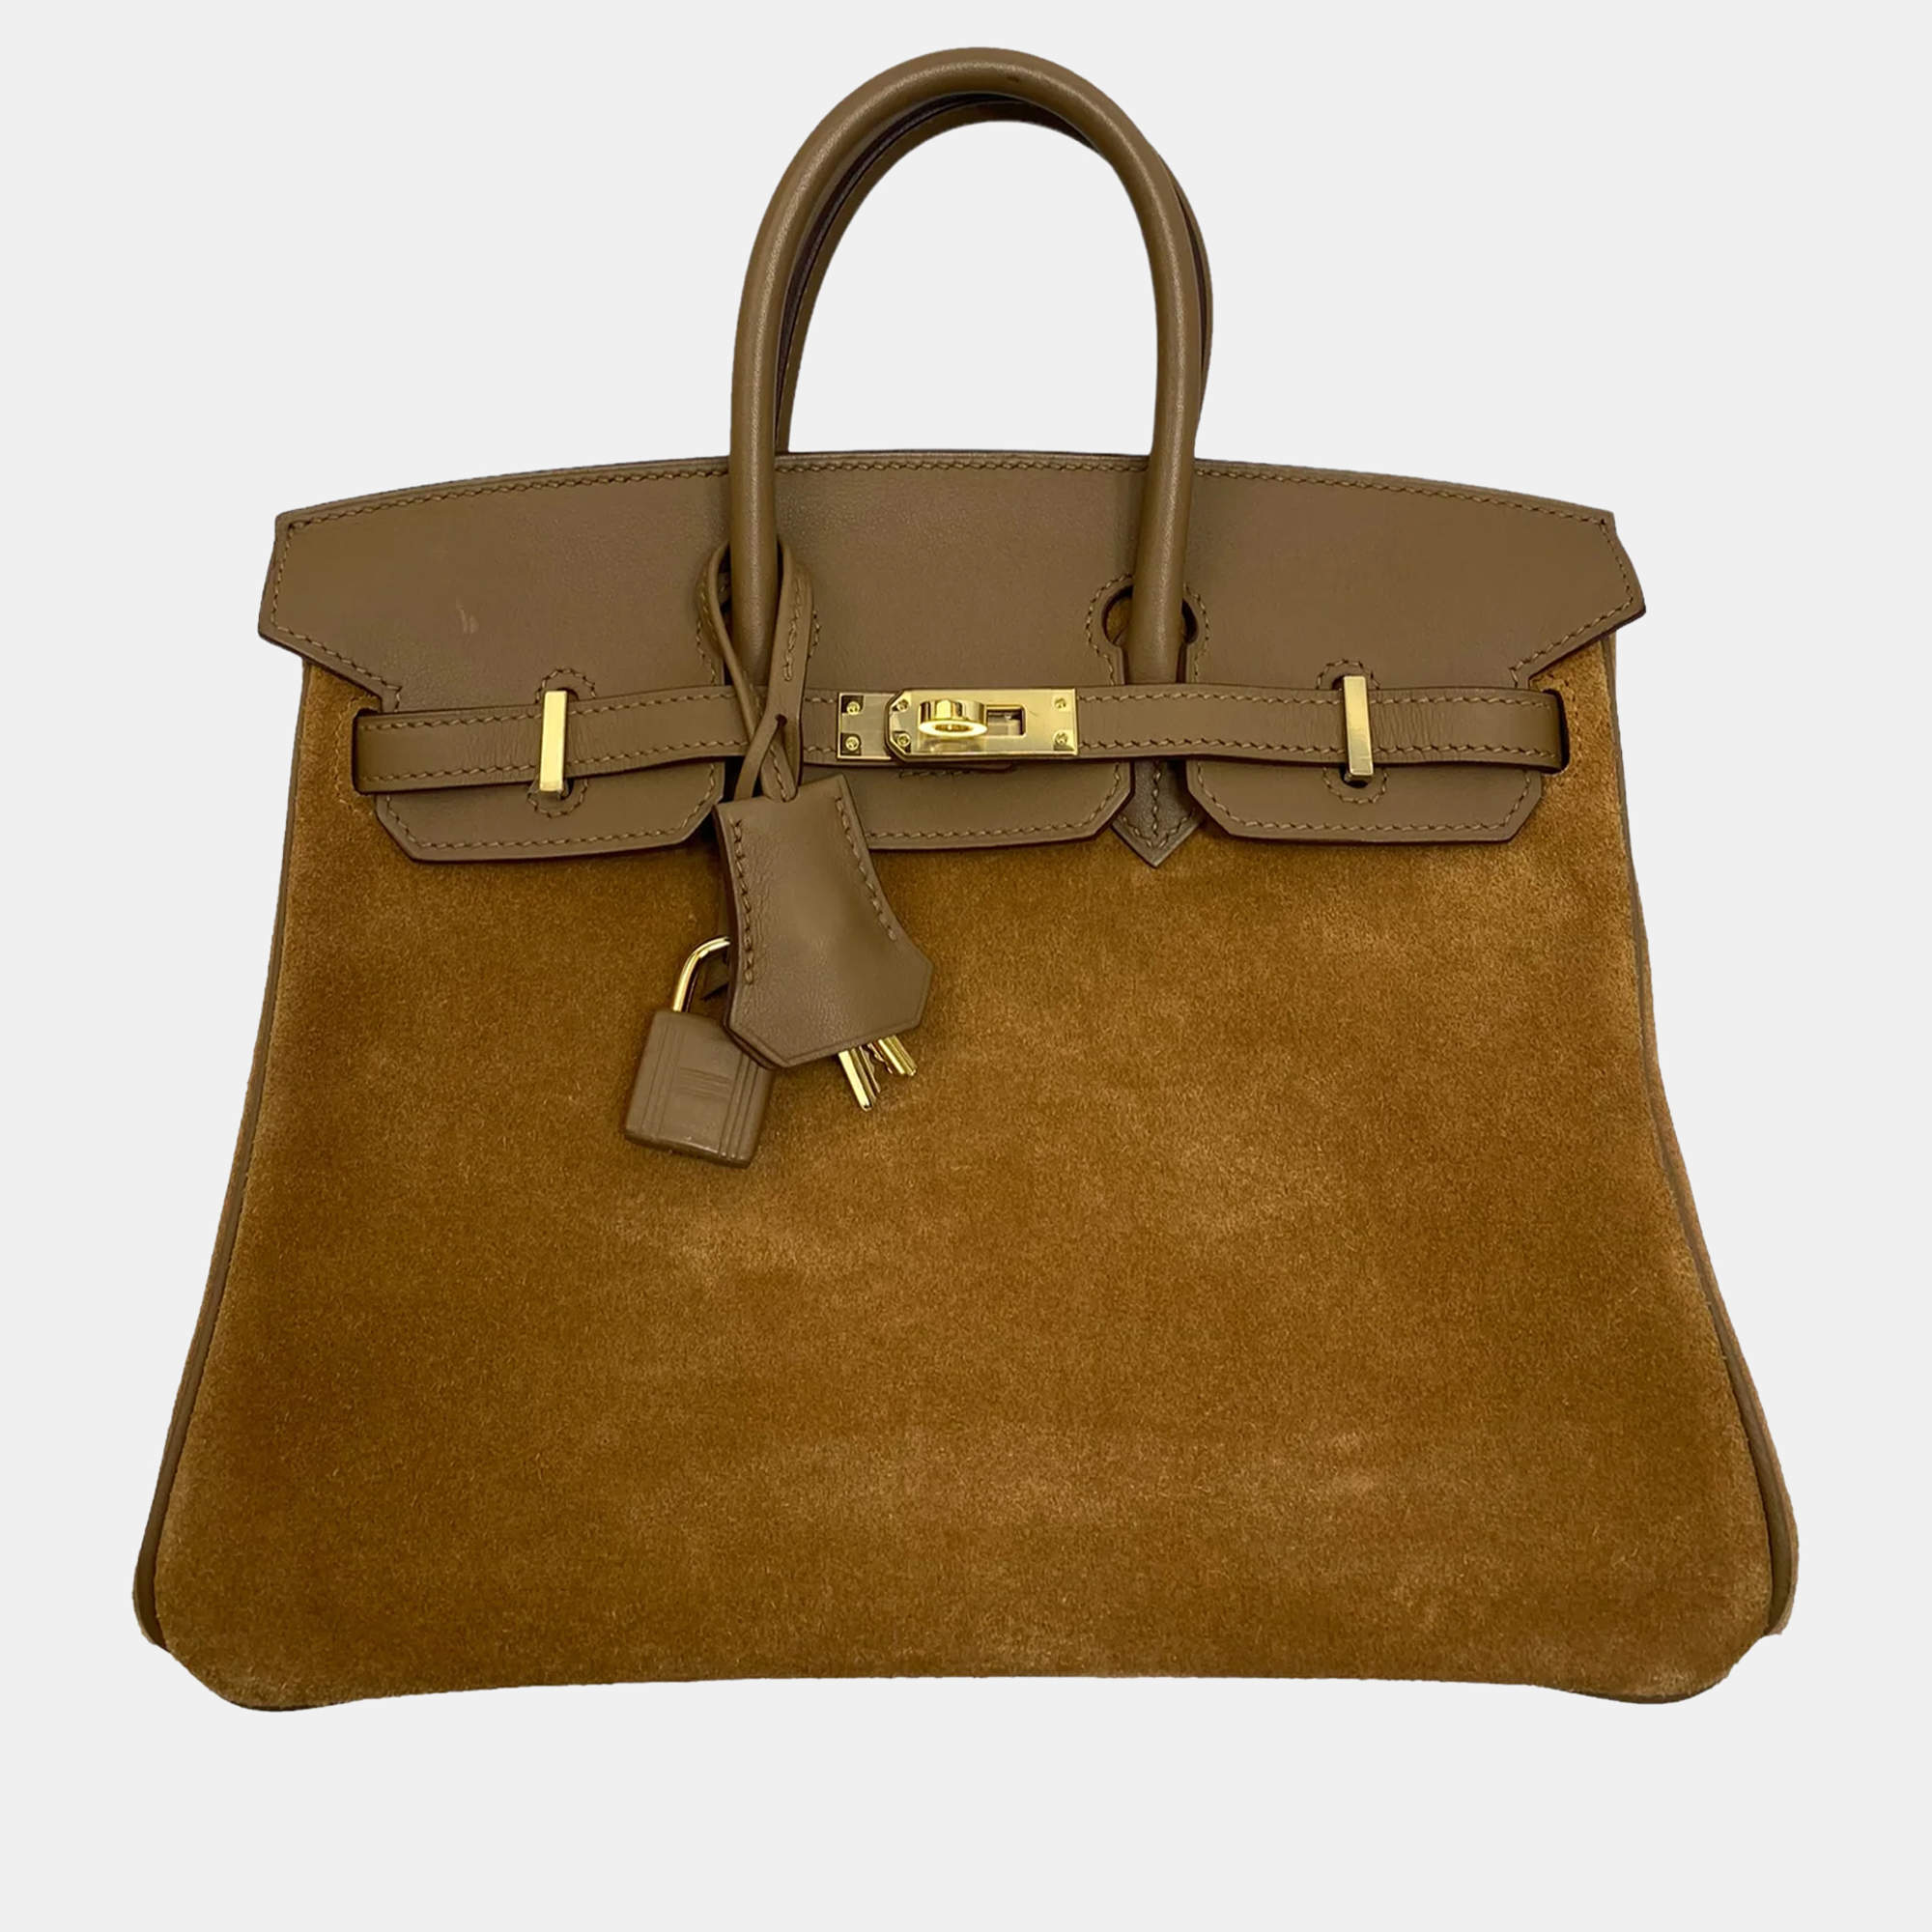 How To Spot An Original Hermes Birkin Bag - Fashion - Nigeria